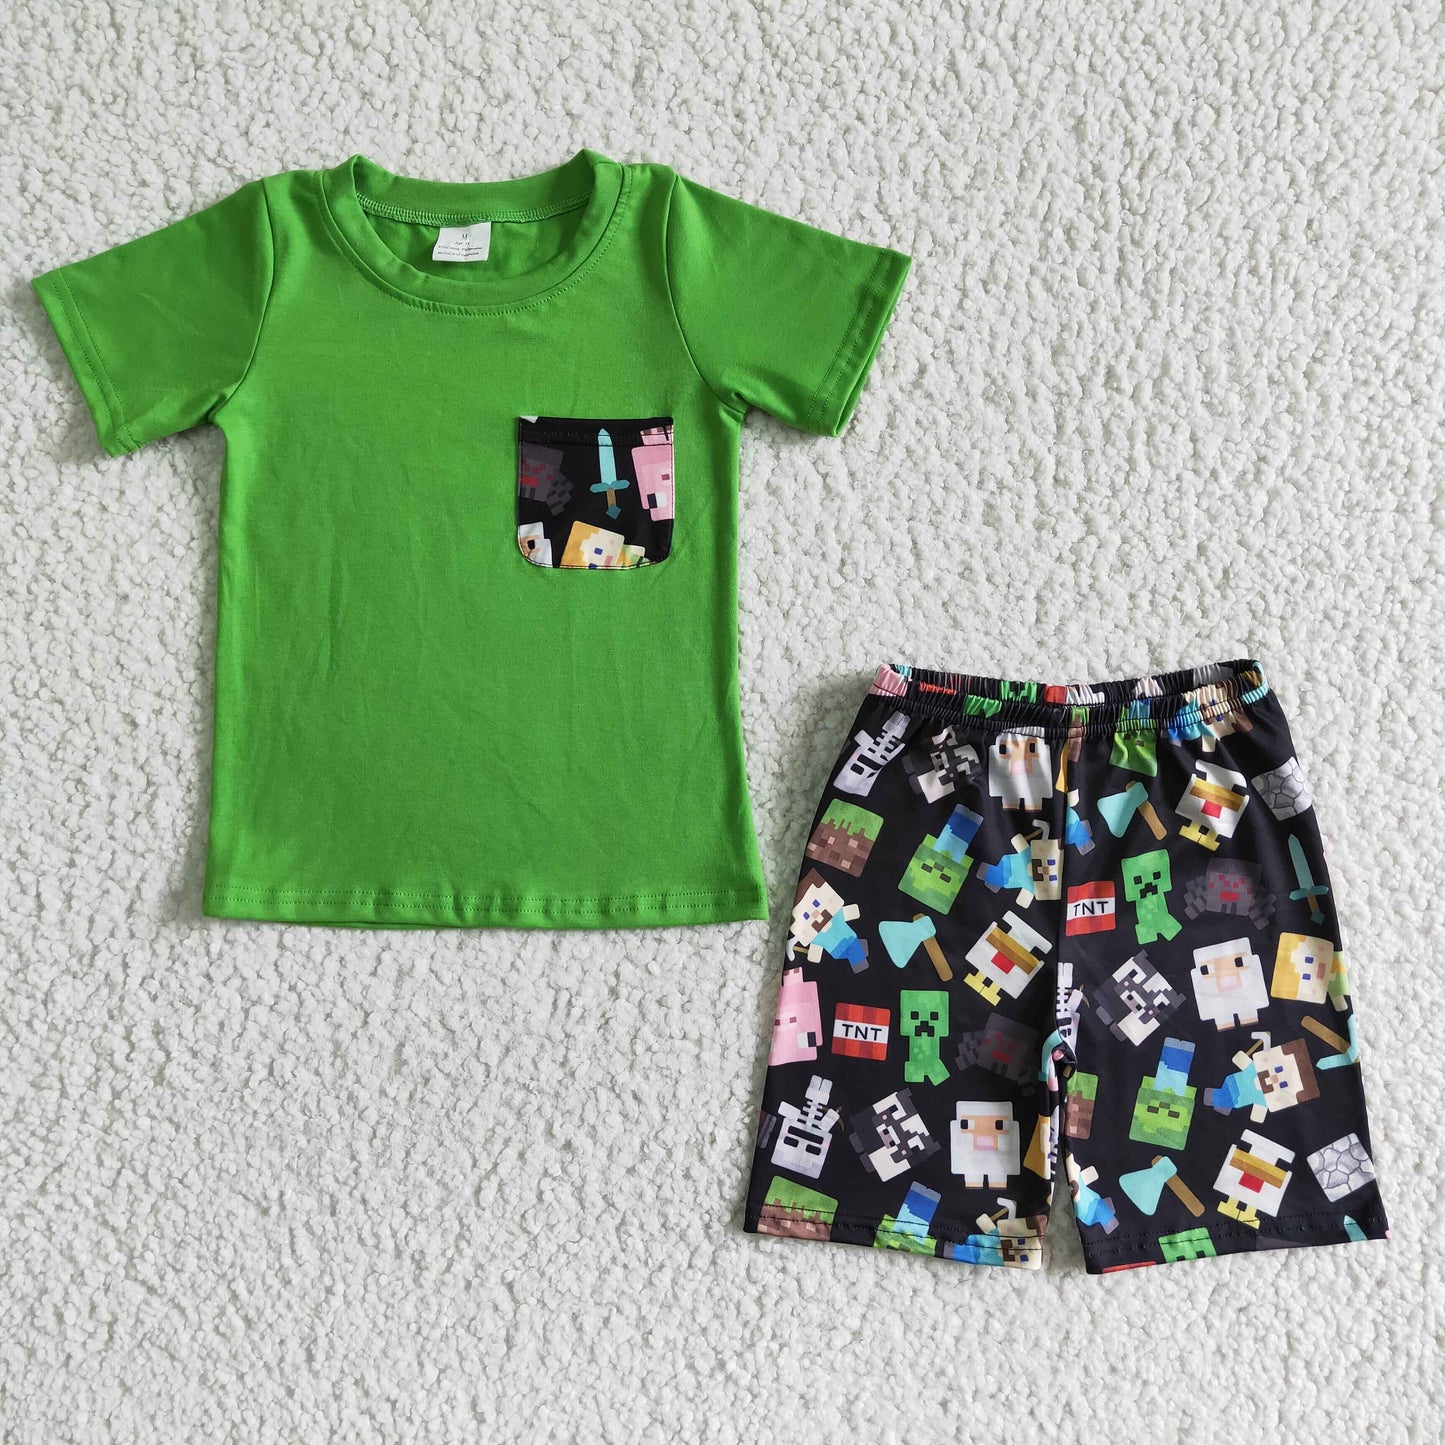 Green popcket shirt cute baby boy summer outfits